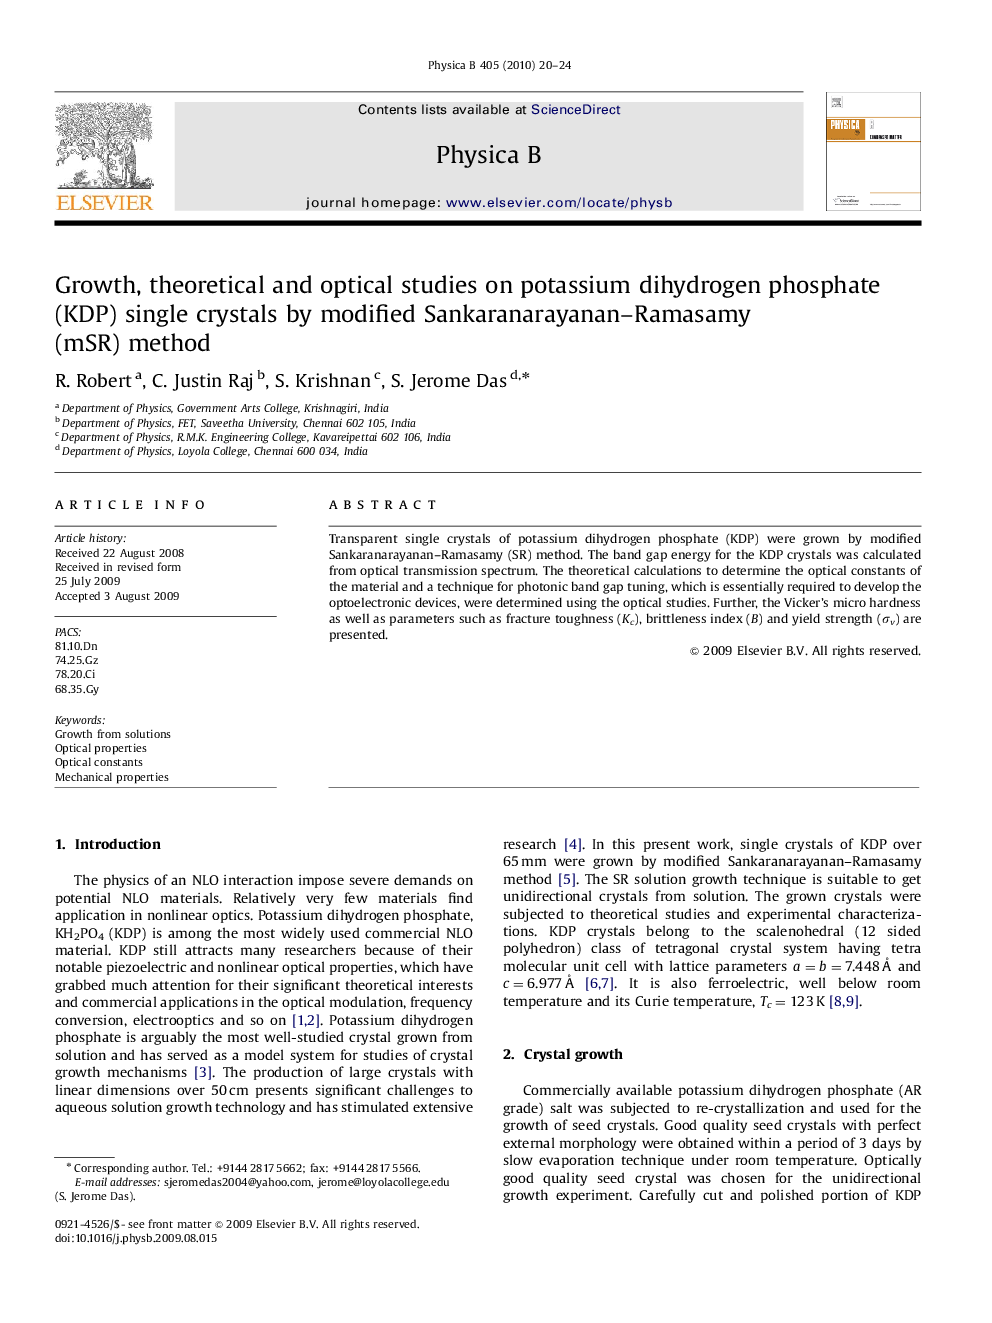 Growth, theoretical and optical studies on potassium dihydrogen phosphate (KDP) single crystals by modified Sankaranarayanan–Ramasamy (mSR) method